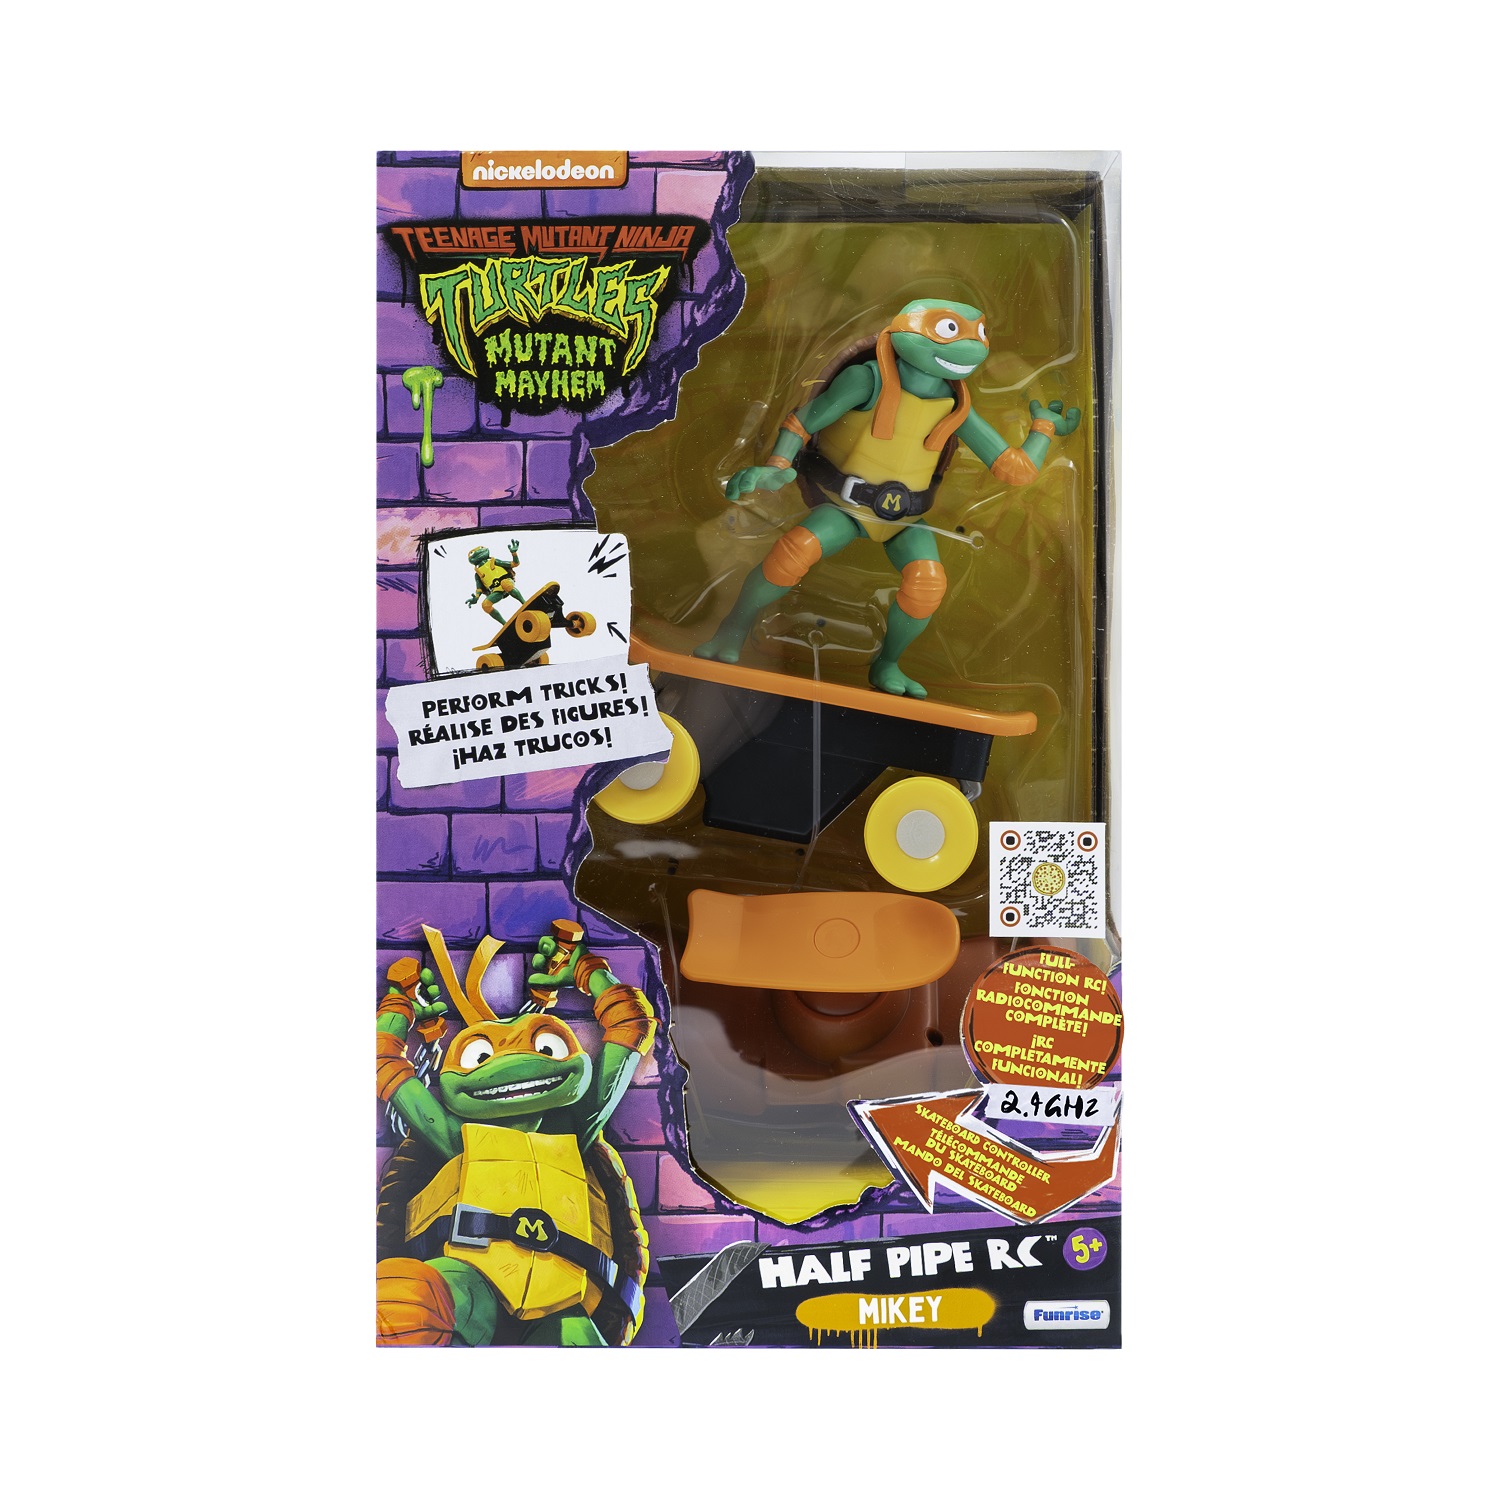 https://www.robot-advance.com/EN/ori-half-pipe-skate-rc-teenage-mutant-ninja-turtle--4974_10101.jpg